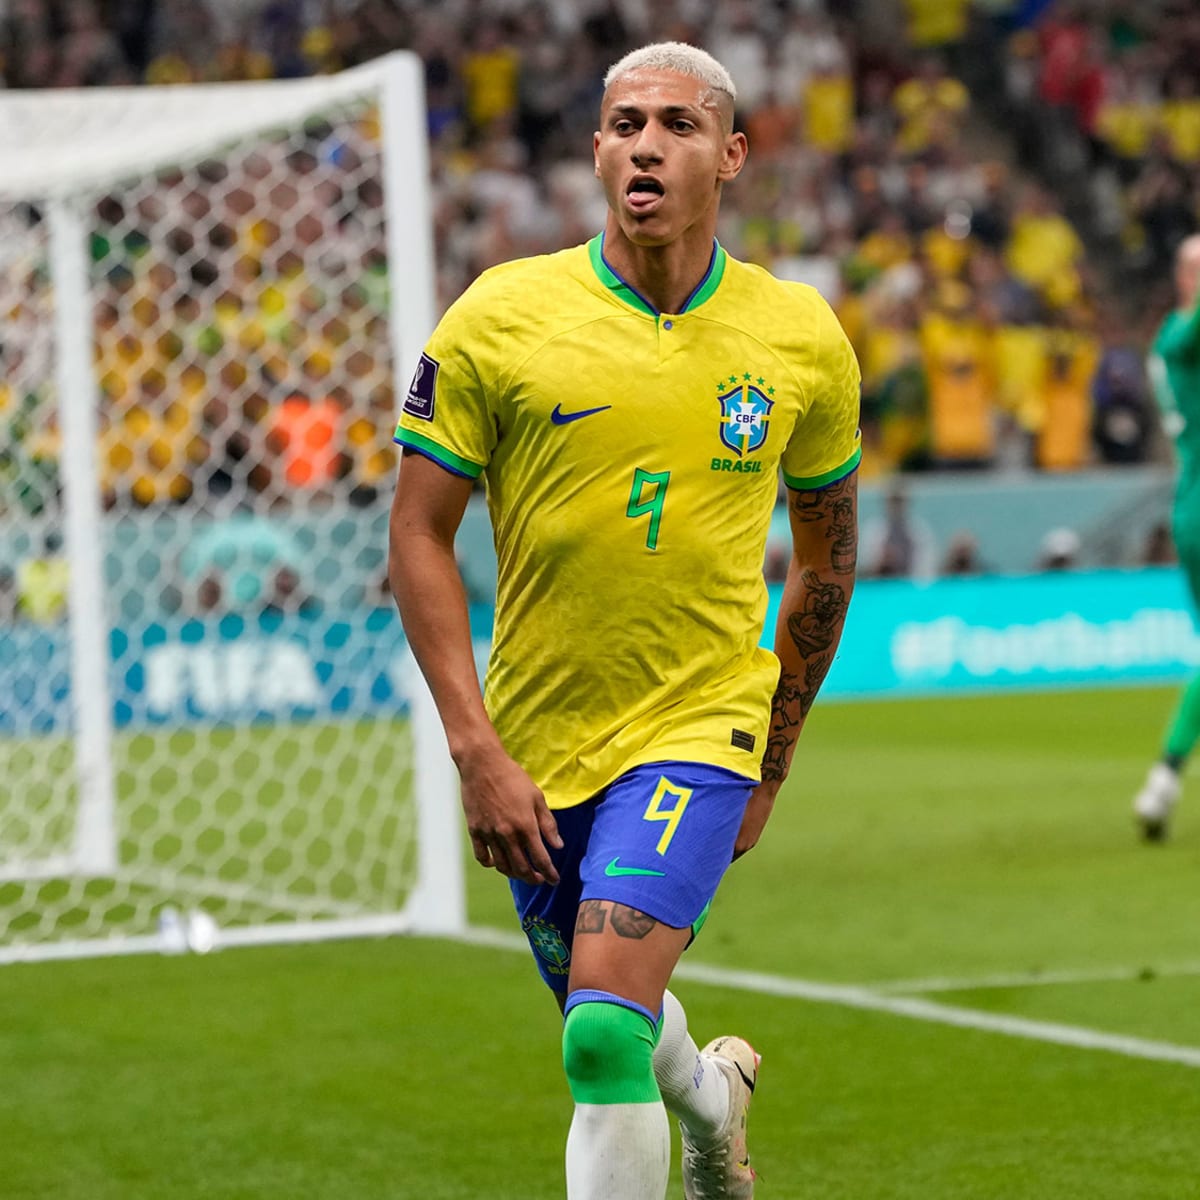 Brazil 2, Serbia 0 Highlights of Richarlisons sensational goal